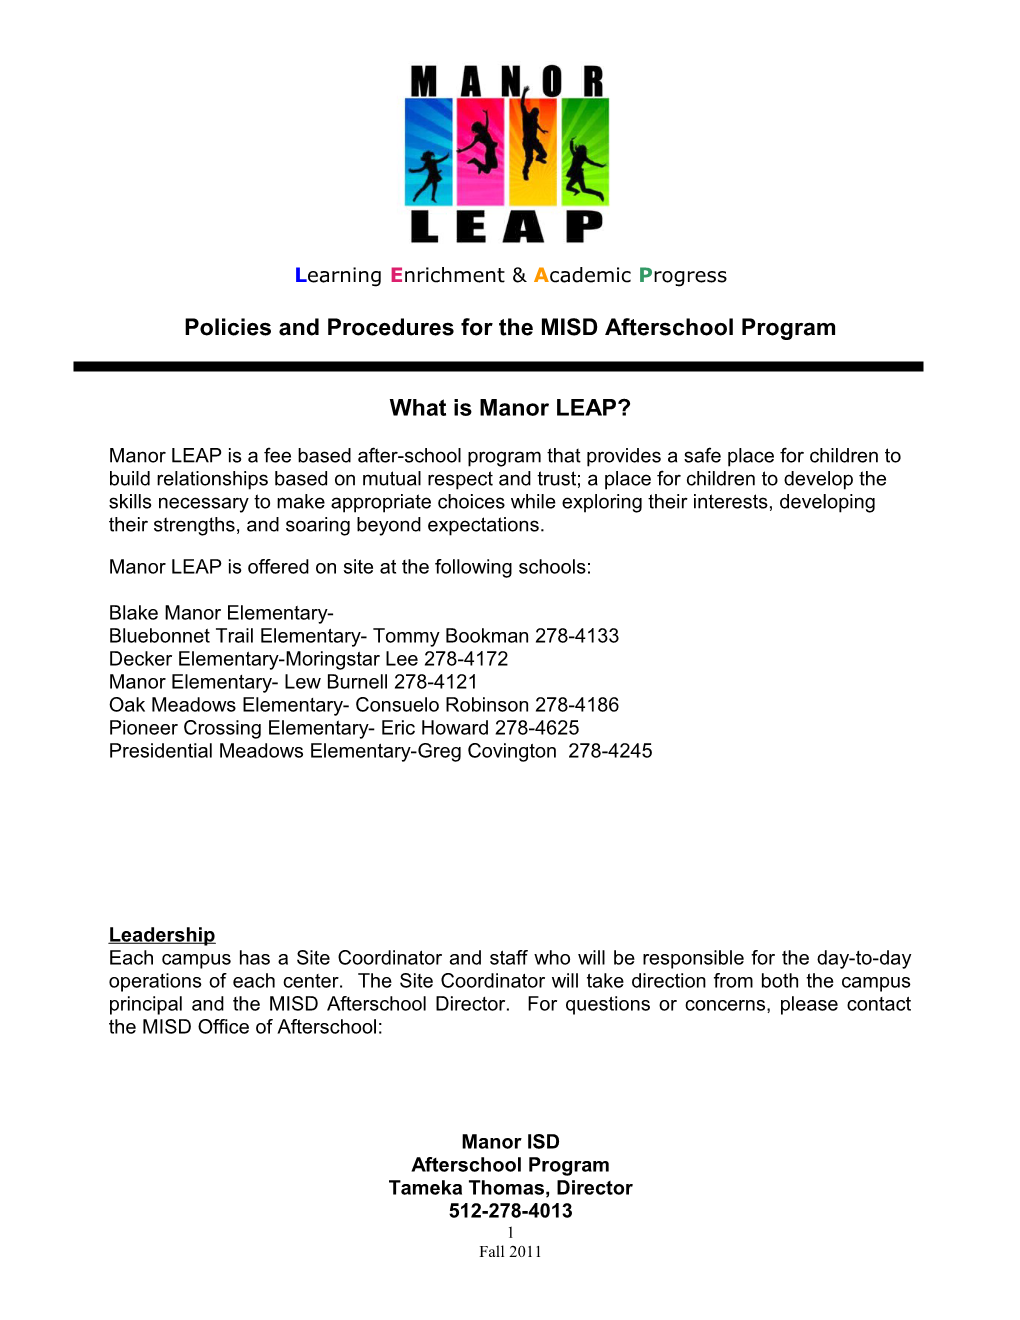 Policies and Procedures for the MISD Afterschool Program